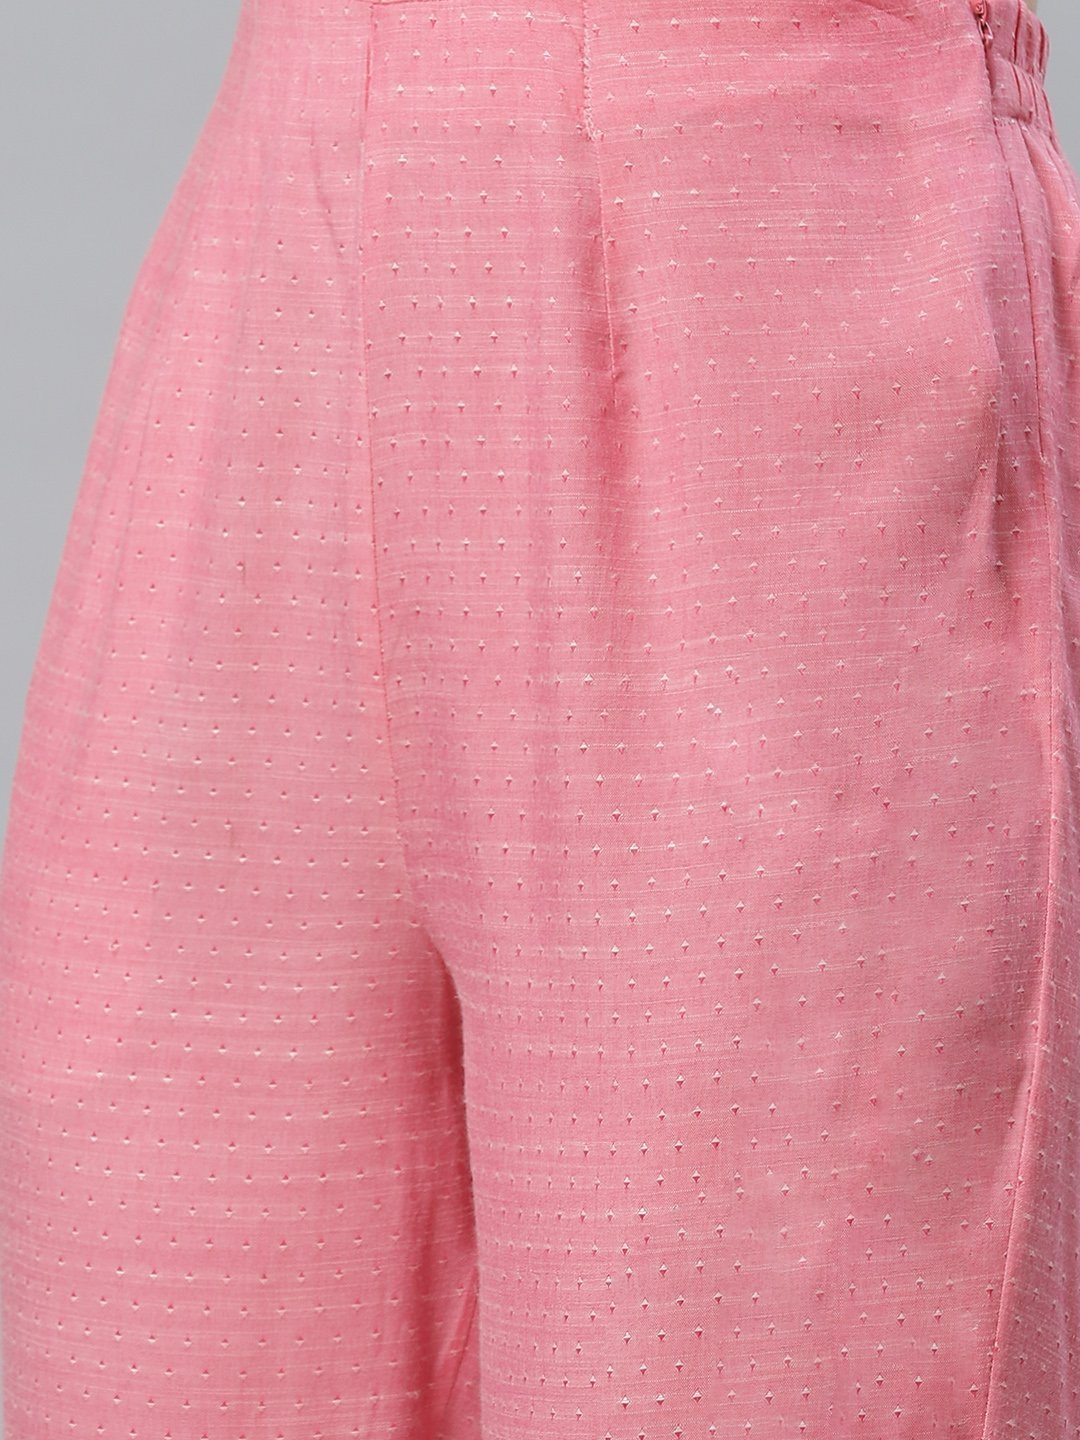 Women's Pink & White Self Design Kurta with Trousers & Dupatta - Jompers